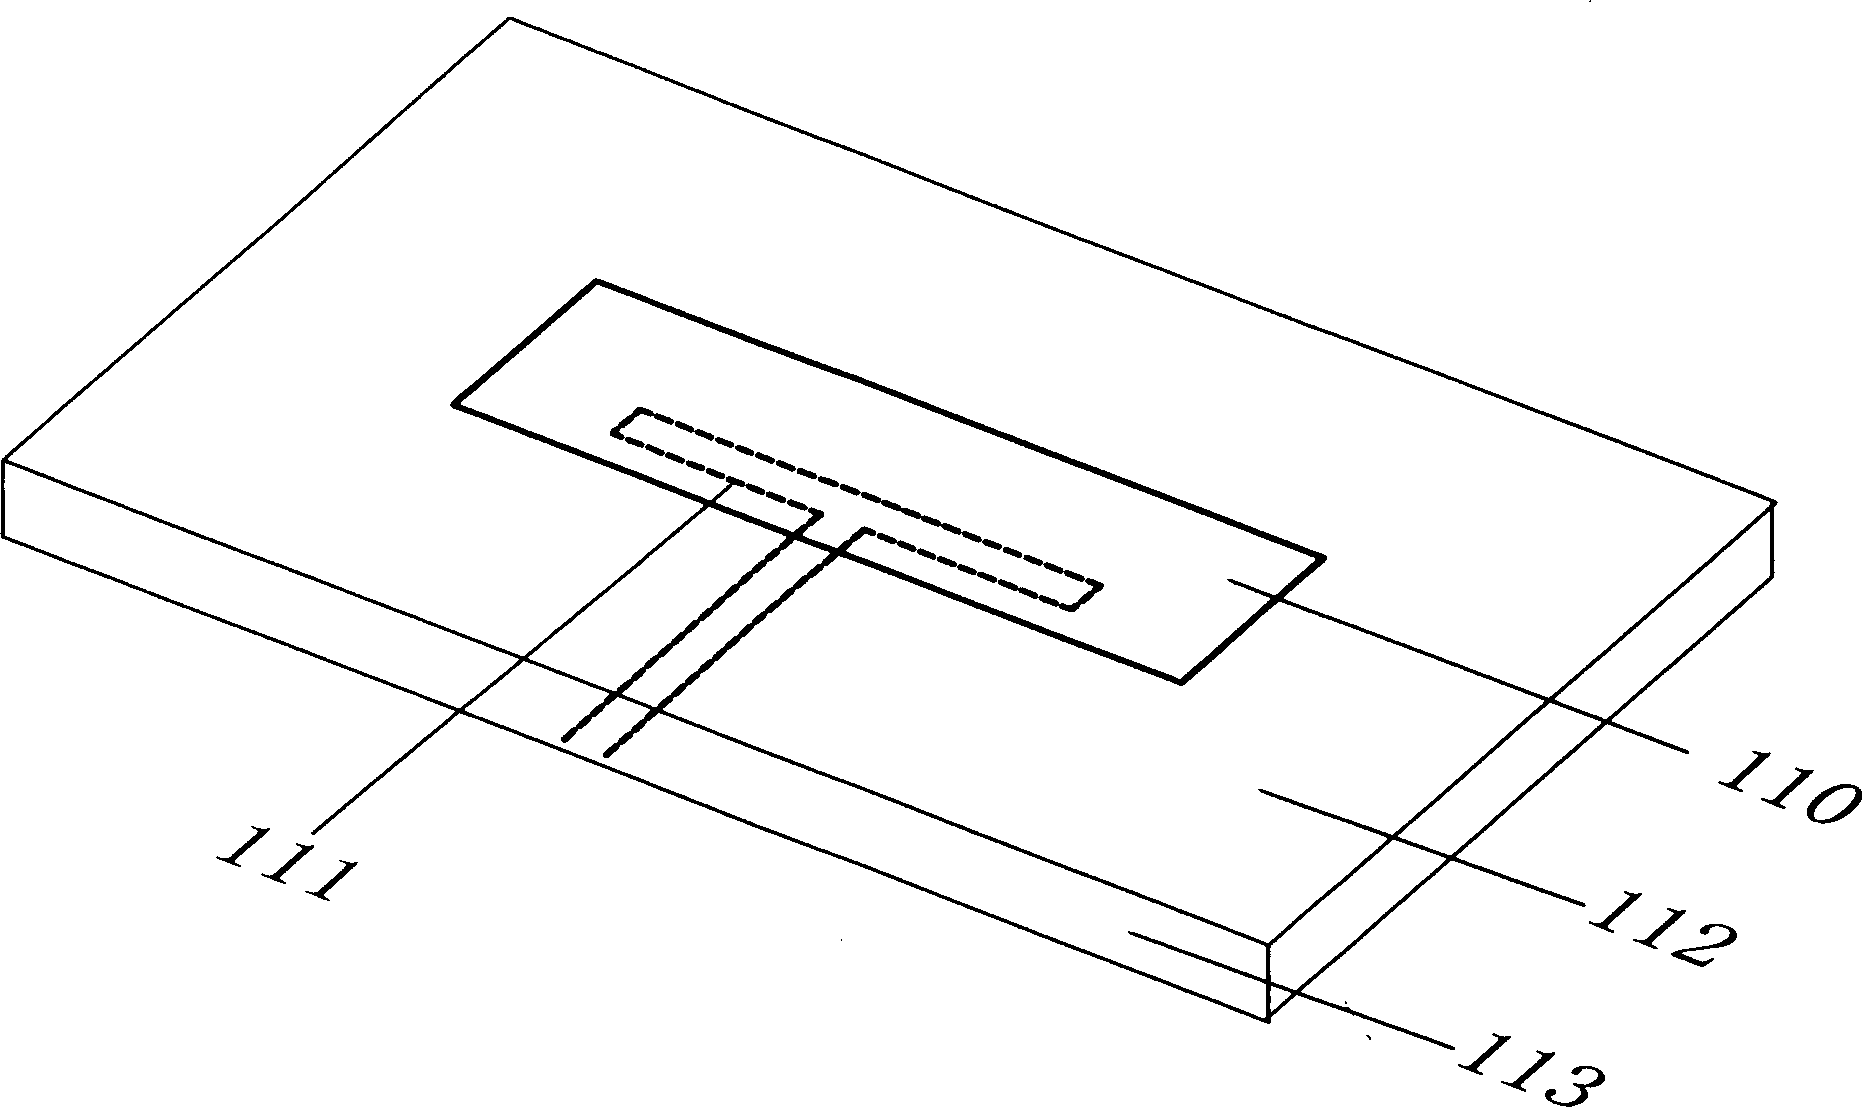 Micro band slot array antenna